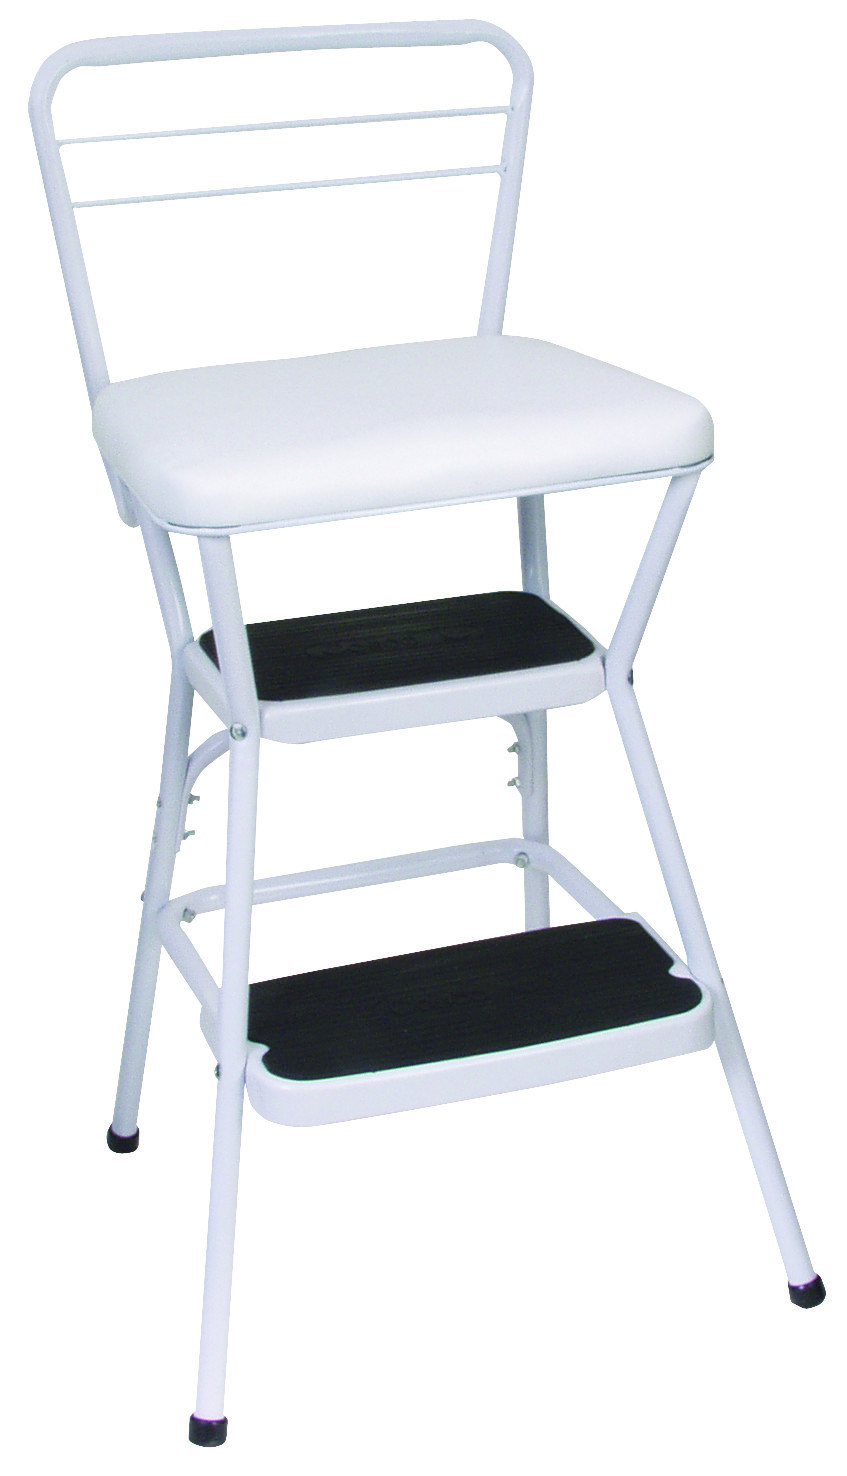 2 step rubbermaid padded seat step stool 9